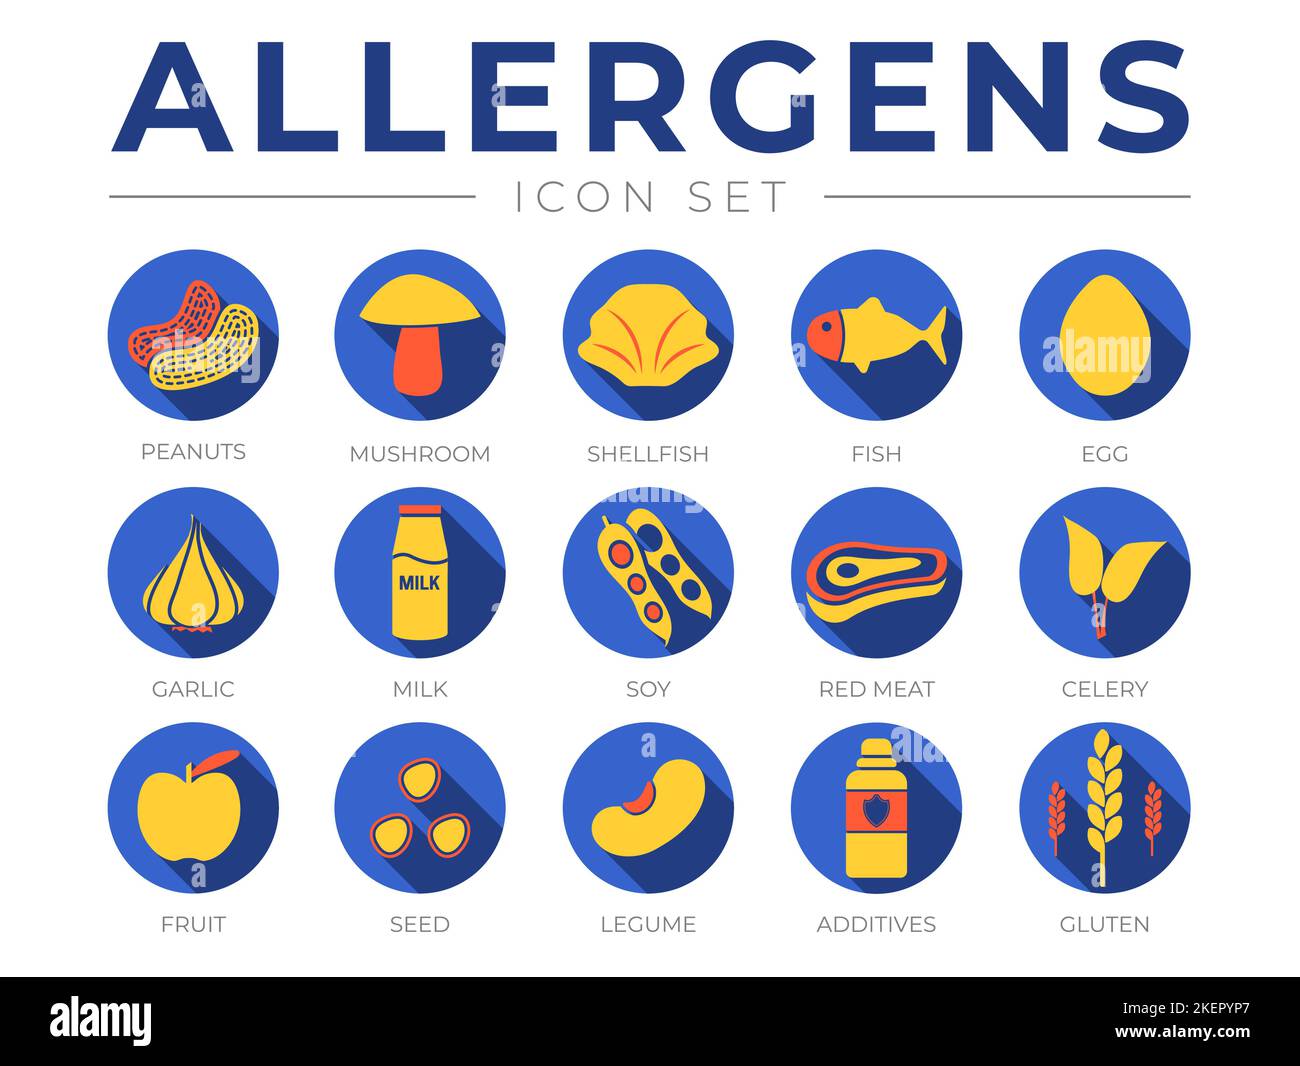 Blue Flat Allergens Icon Set. Peanuts, Mushroom, Shellfish, Fish, Egg, Garlic, Milk, Soy Red Meat, Celery, Fruit, Seed, Legume and Additives Gluten Al Stock Vector